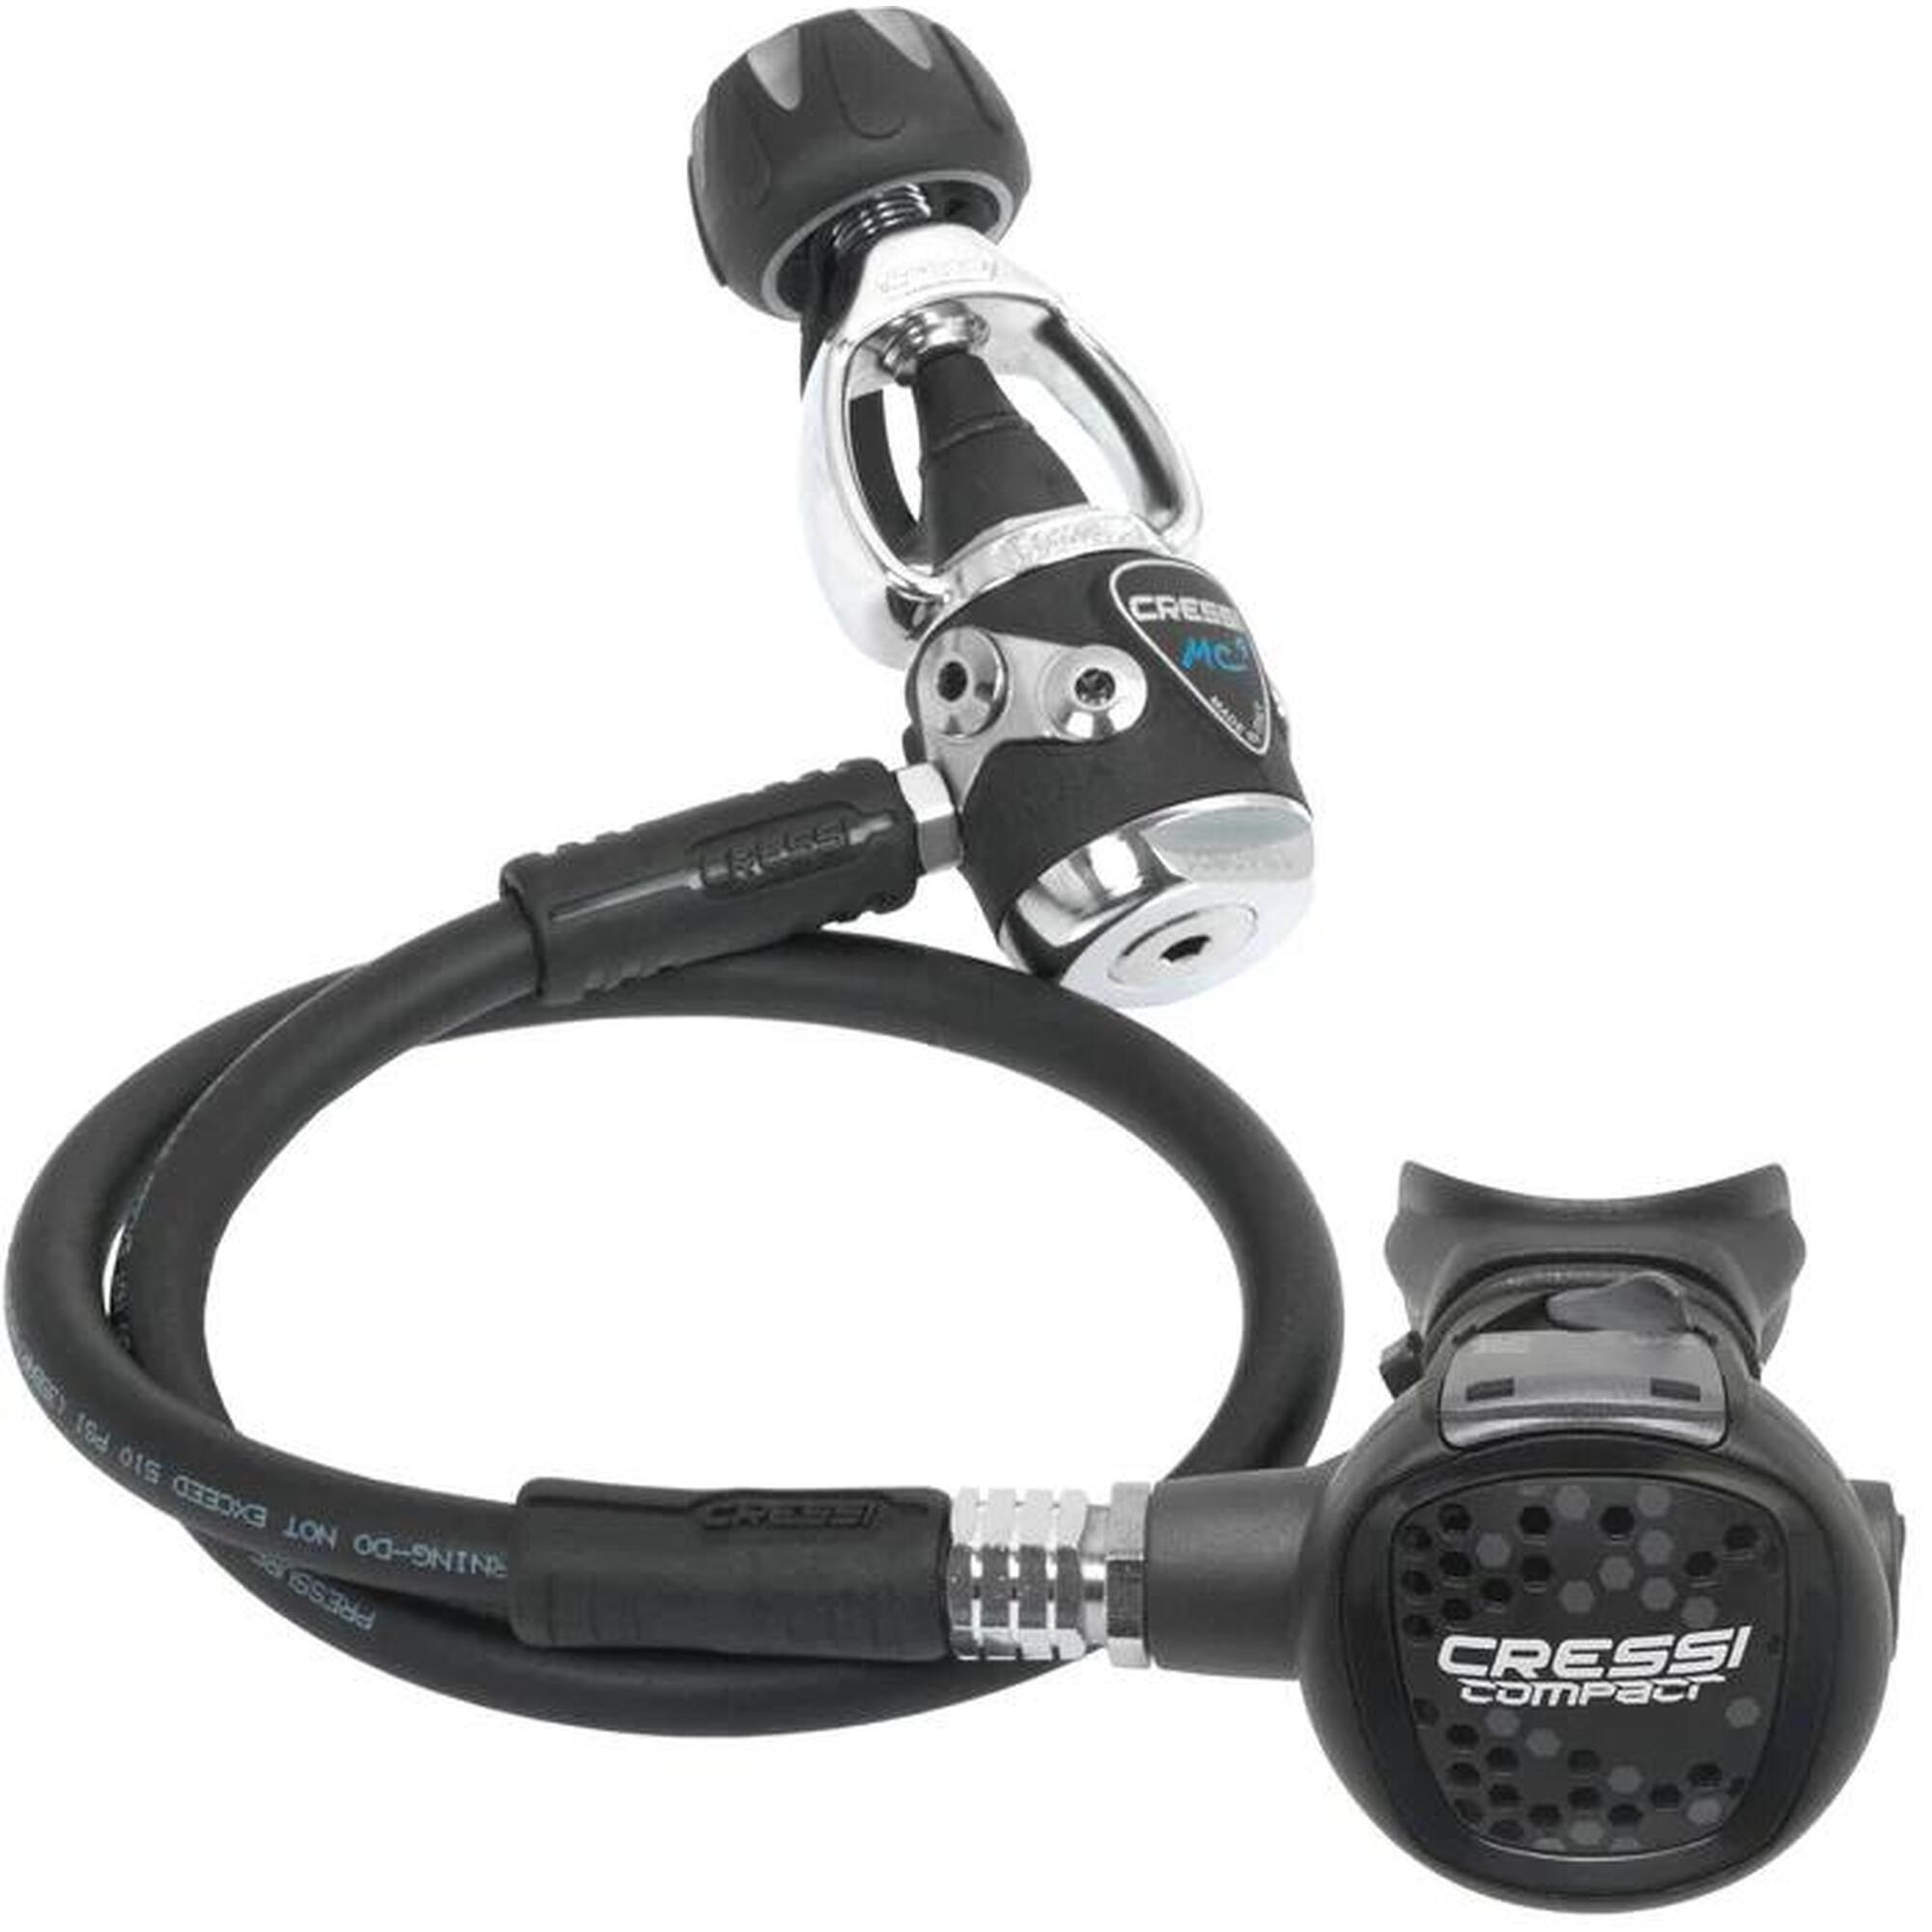 Start Pro Scuba Set Diving Equipment Set - Black